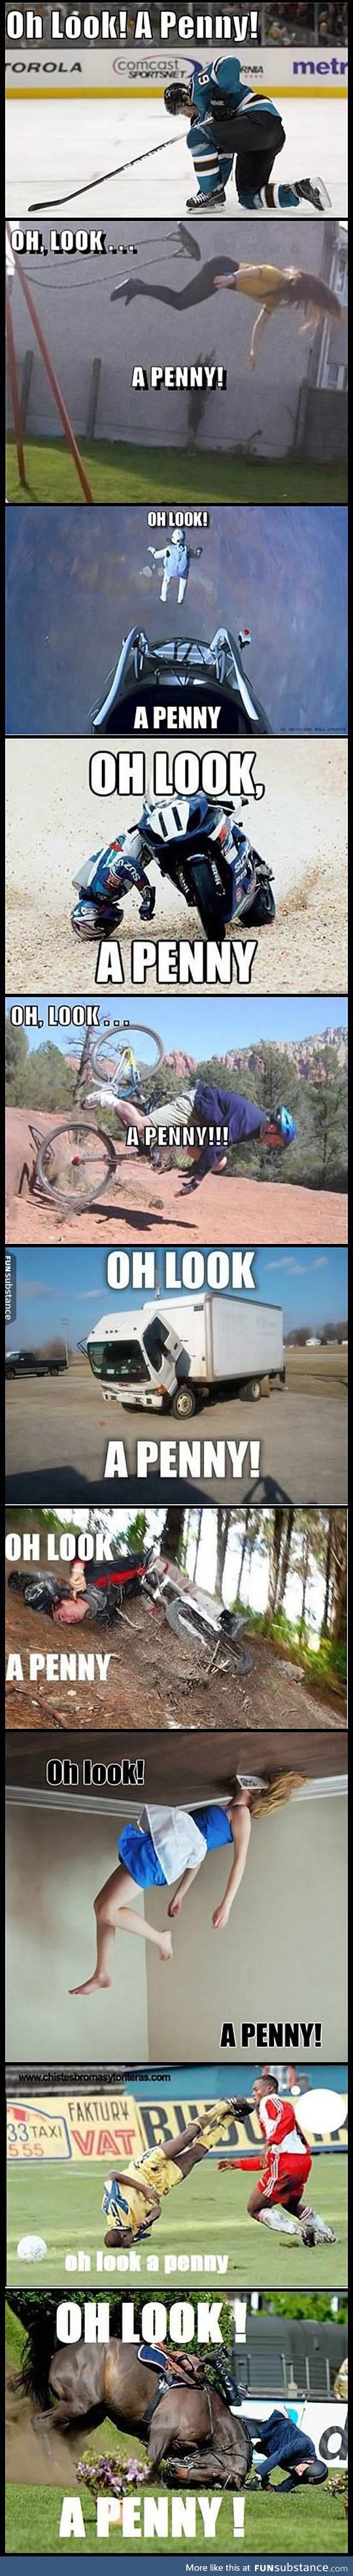 Hey look, a penny